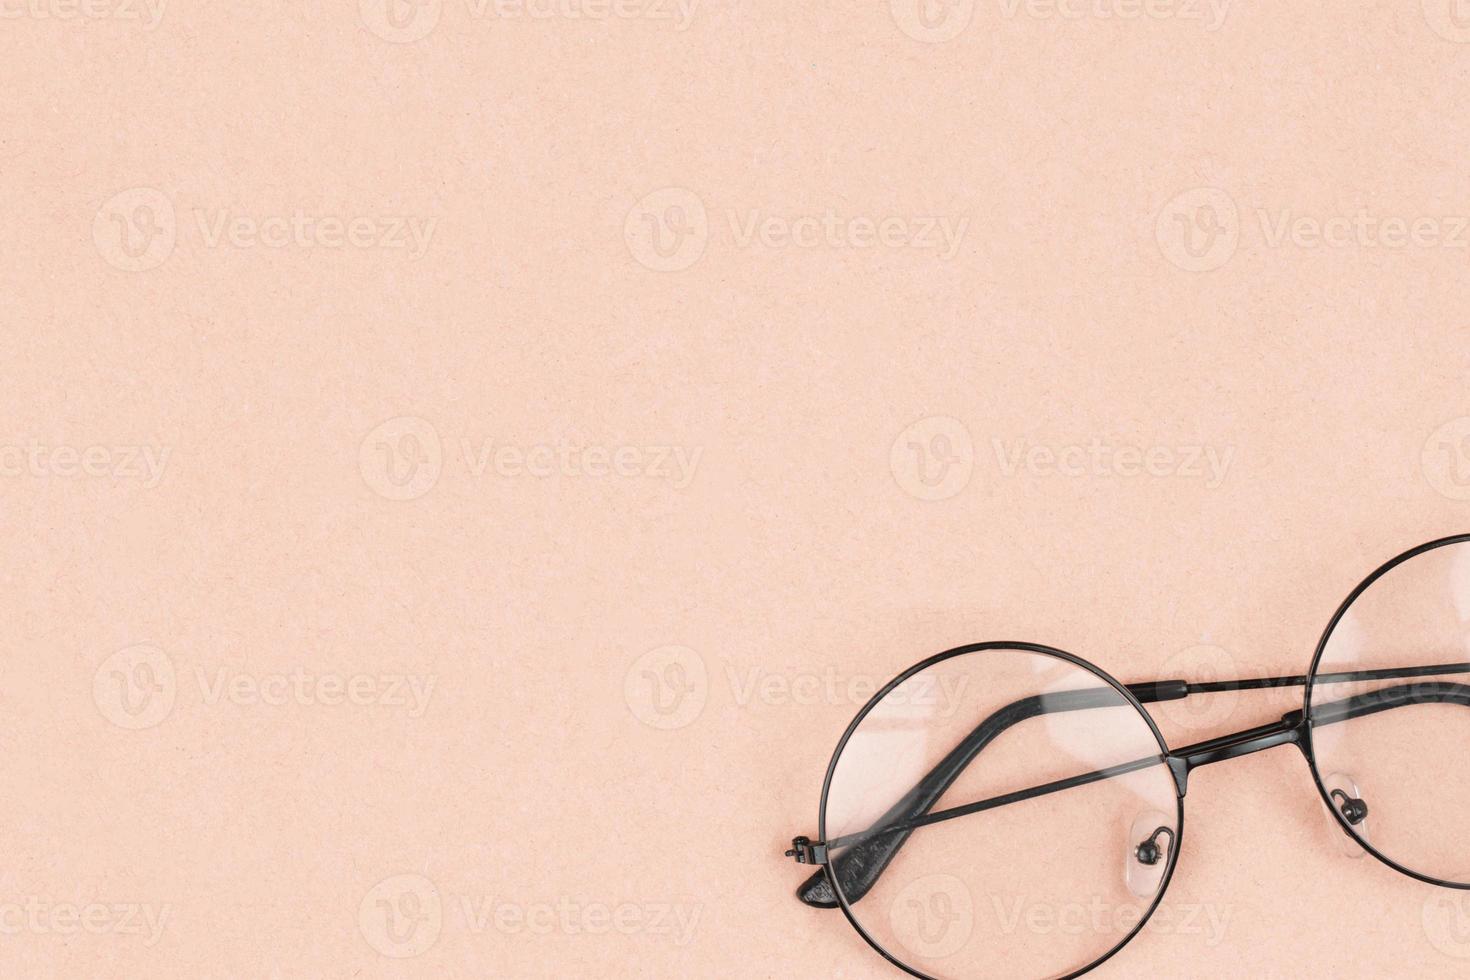 ronde hipster zonnebril op roze achtergrond foto